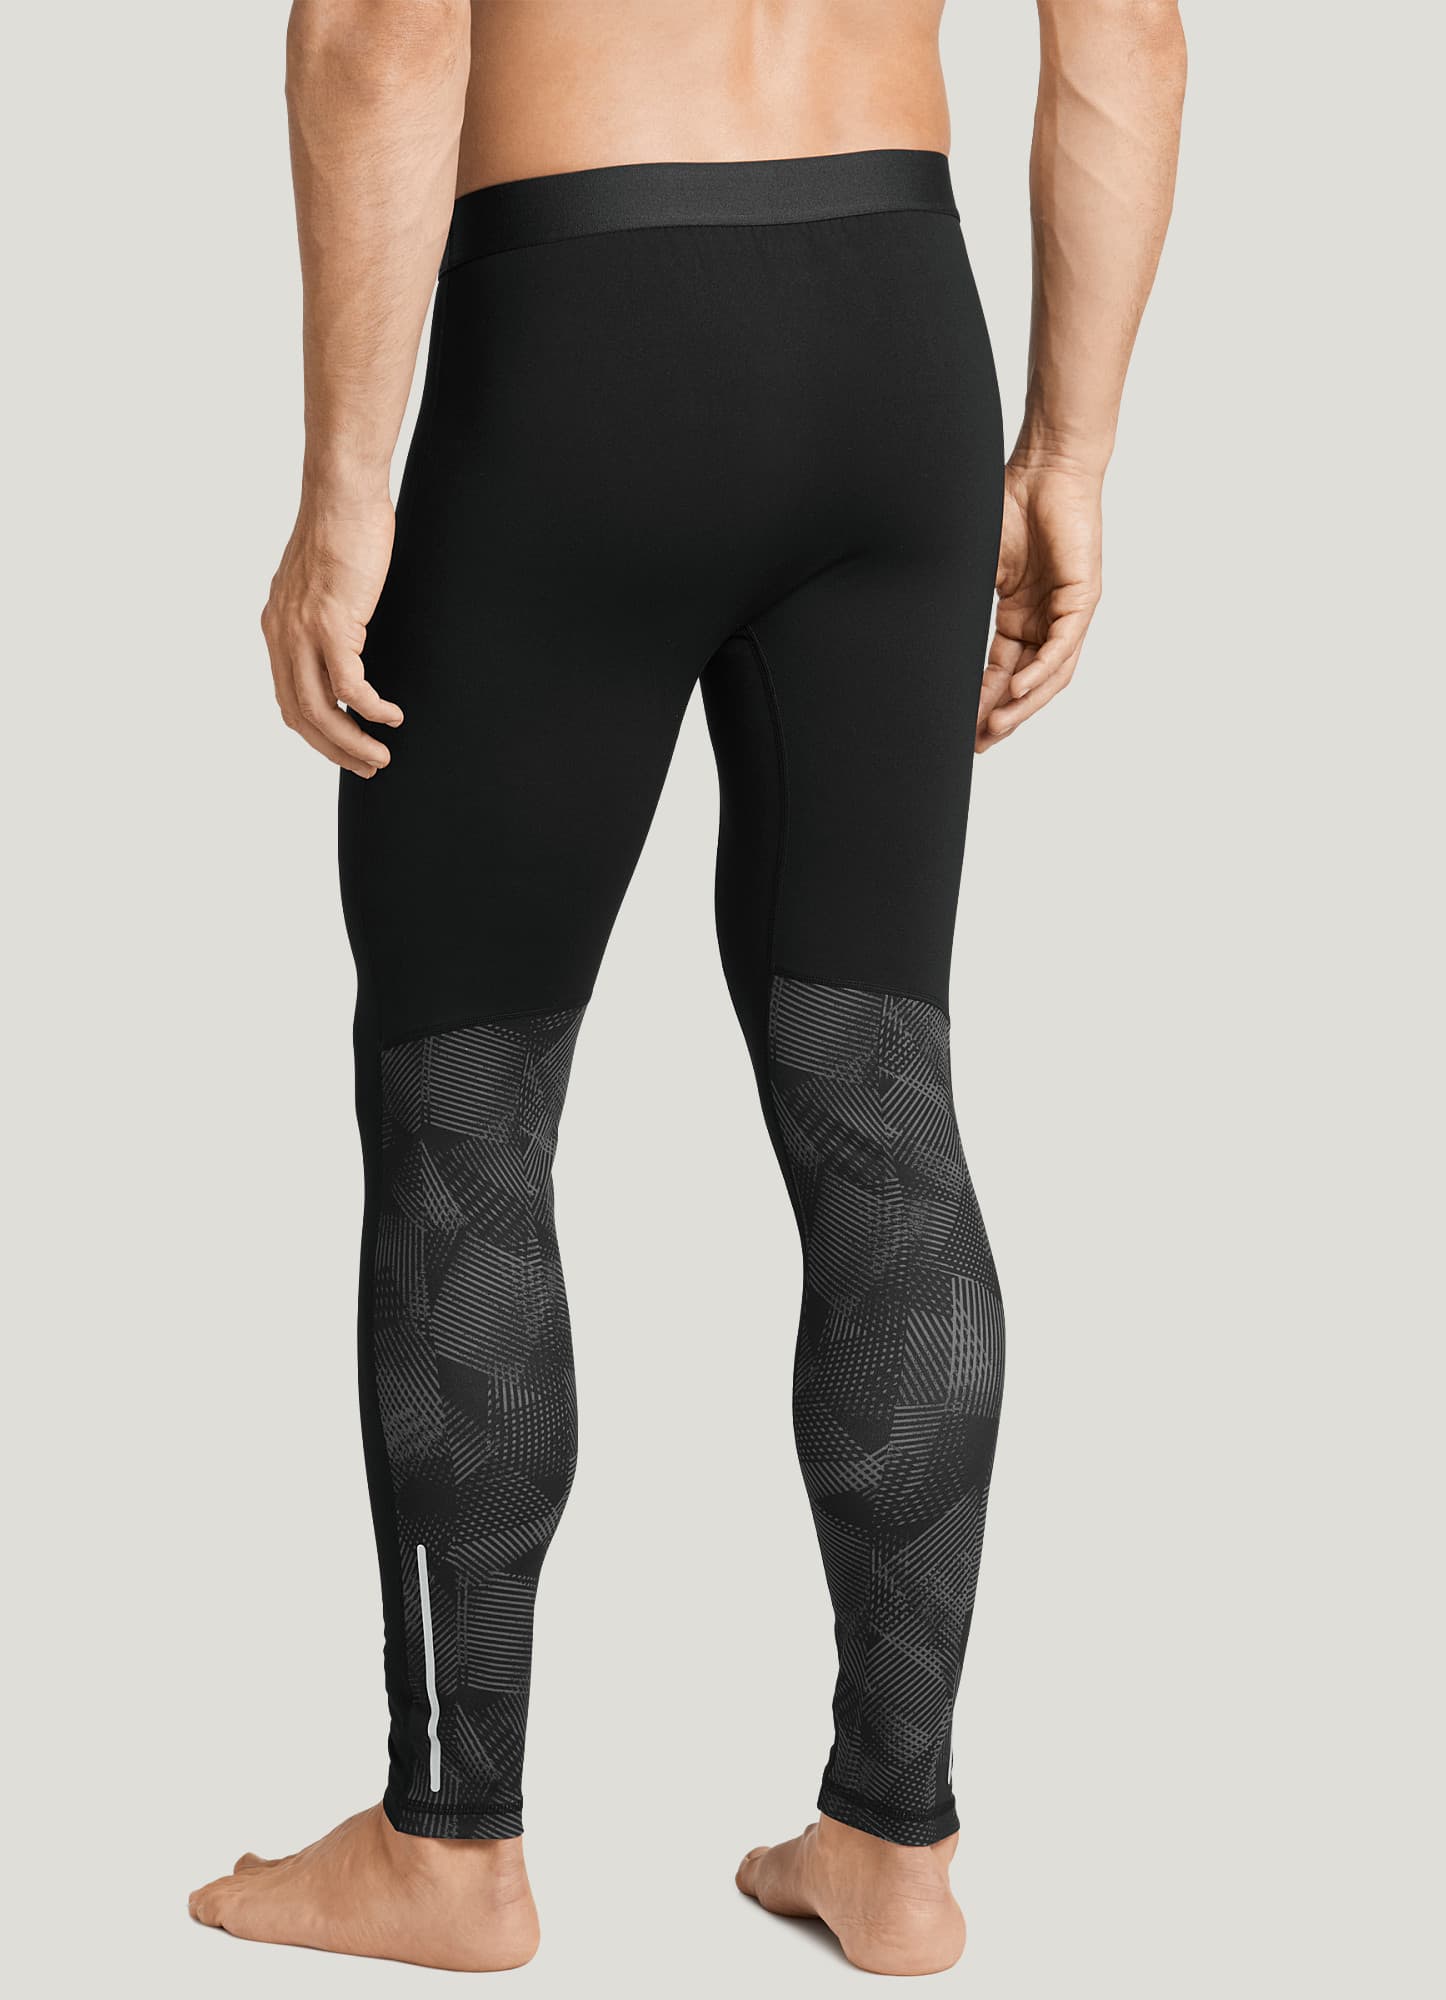 Buy Black Track Pants for Women by Jockey Online | Ajio.com